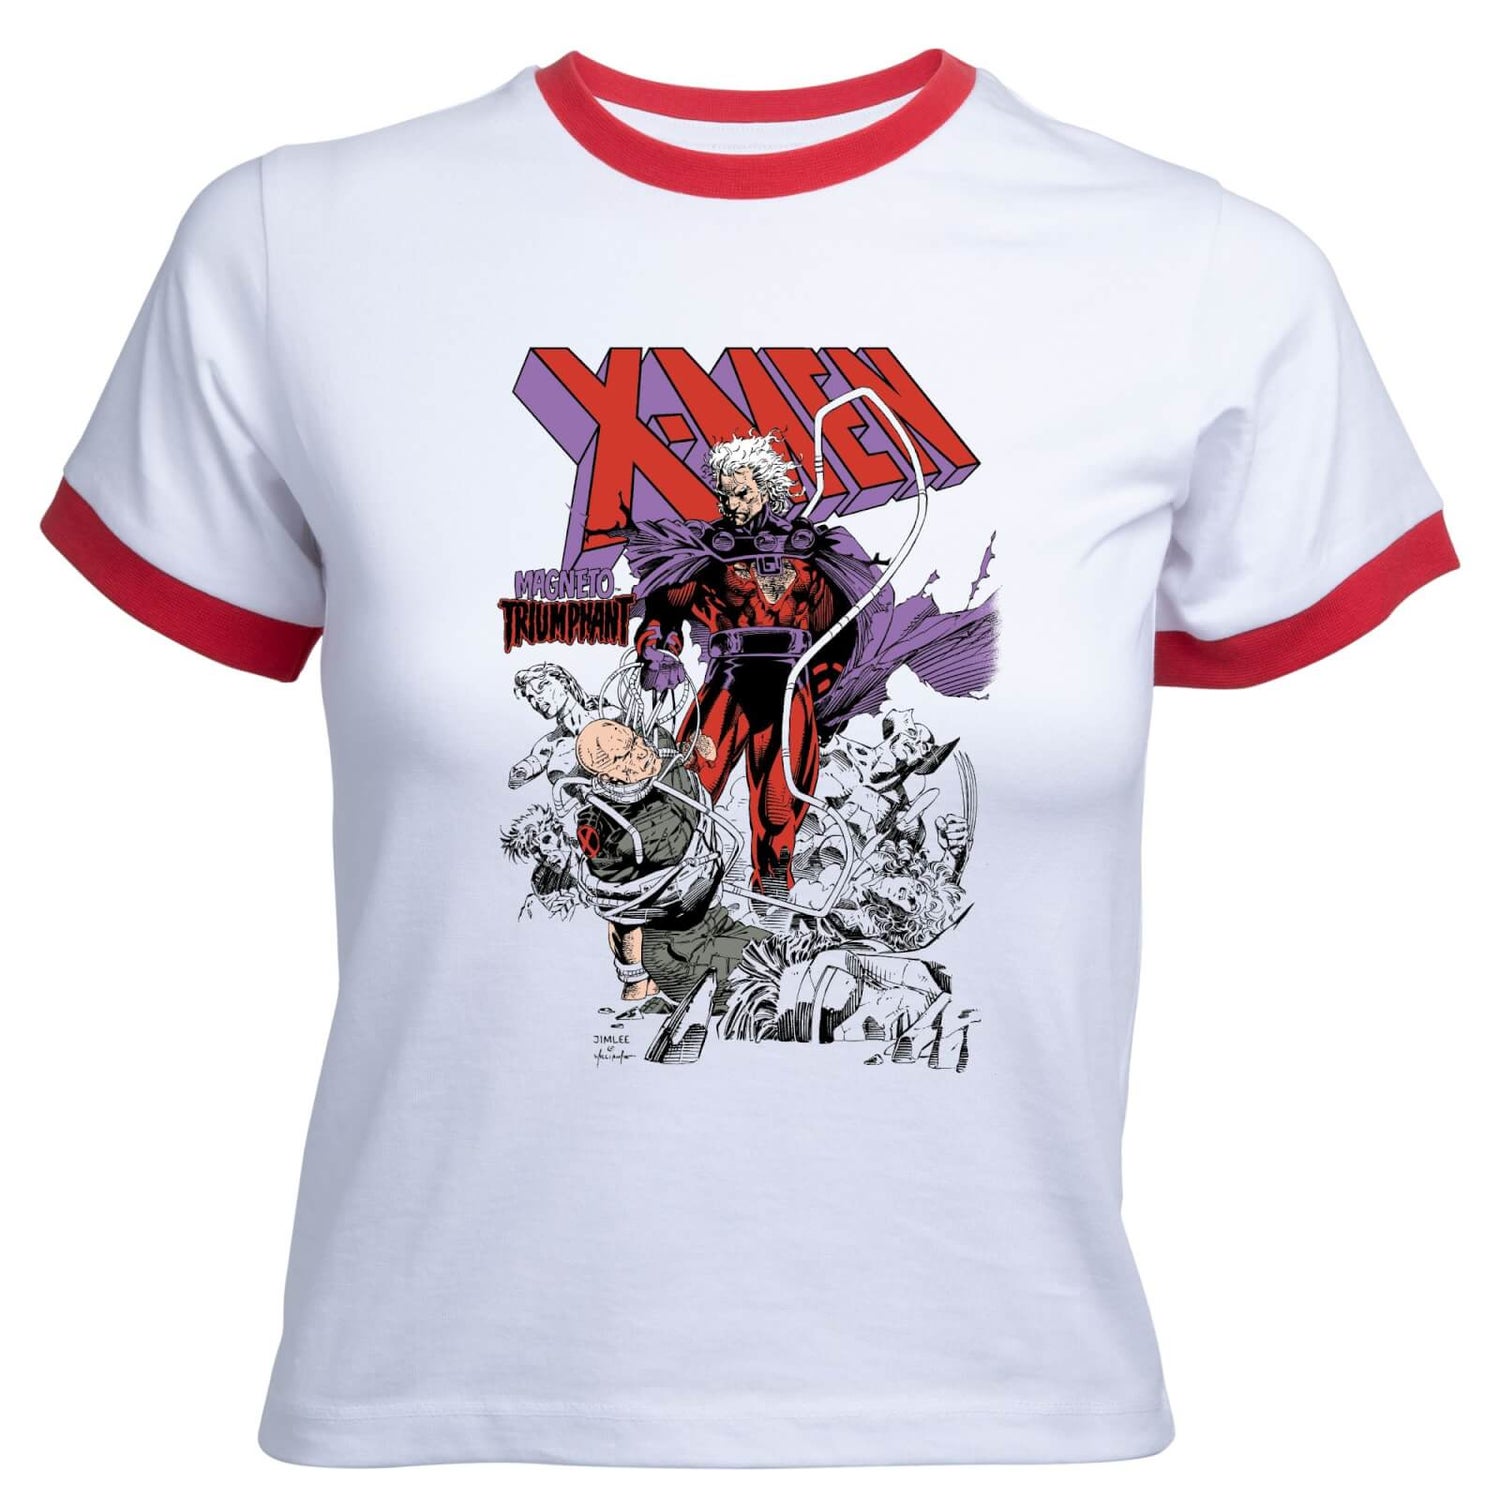 X-Men Magneto Triumphant Women's Cropped Ringer T-Shirt - White Red